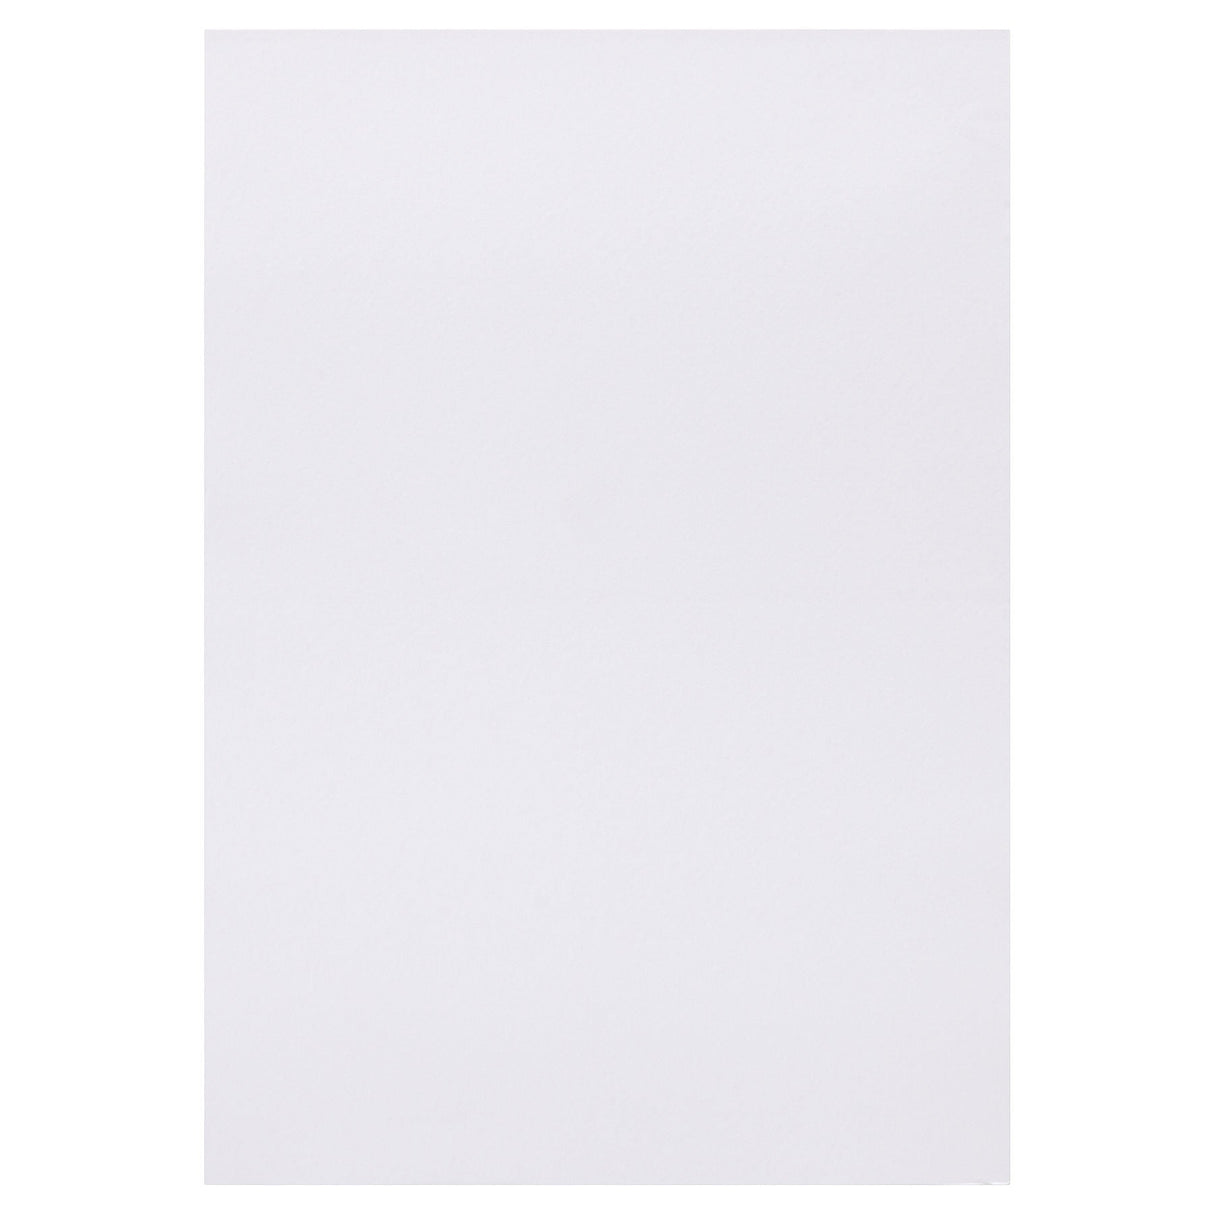 Premier Activity A2 Card - 160gsm - White - 100 Sheets-Craft Paper & Card-Premier|StationeryShop.co.uk